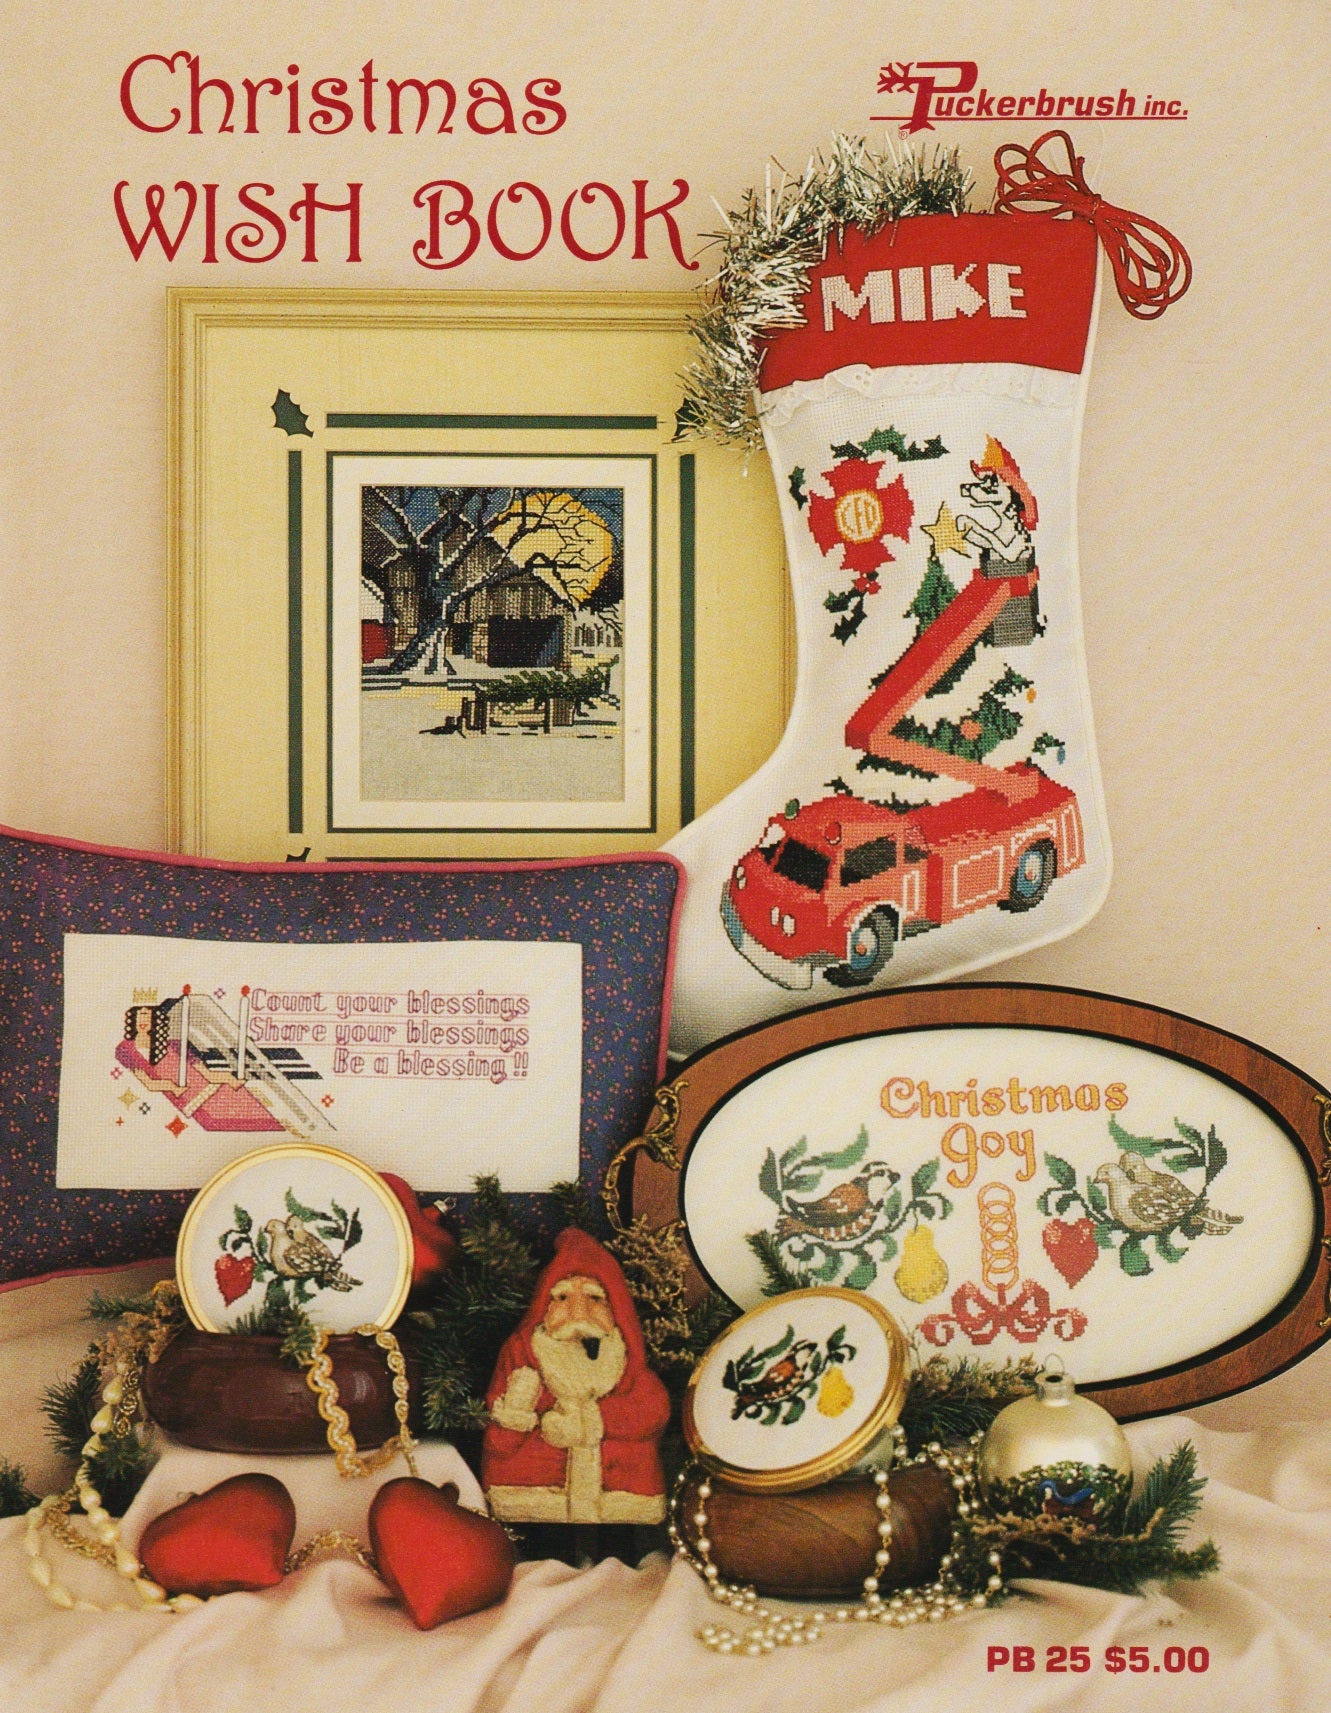 Puckerbrush Christmas Wish Book OB25 cross stitch pattern